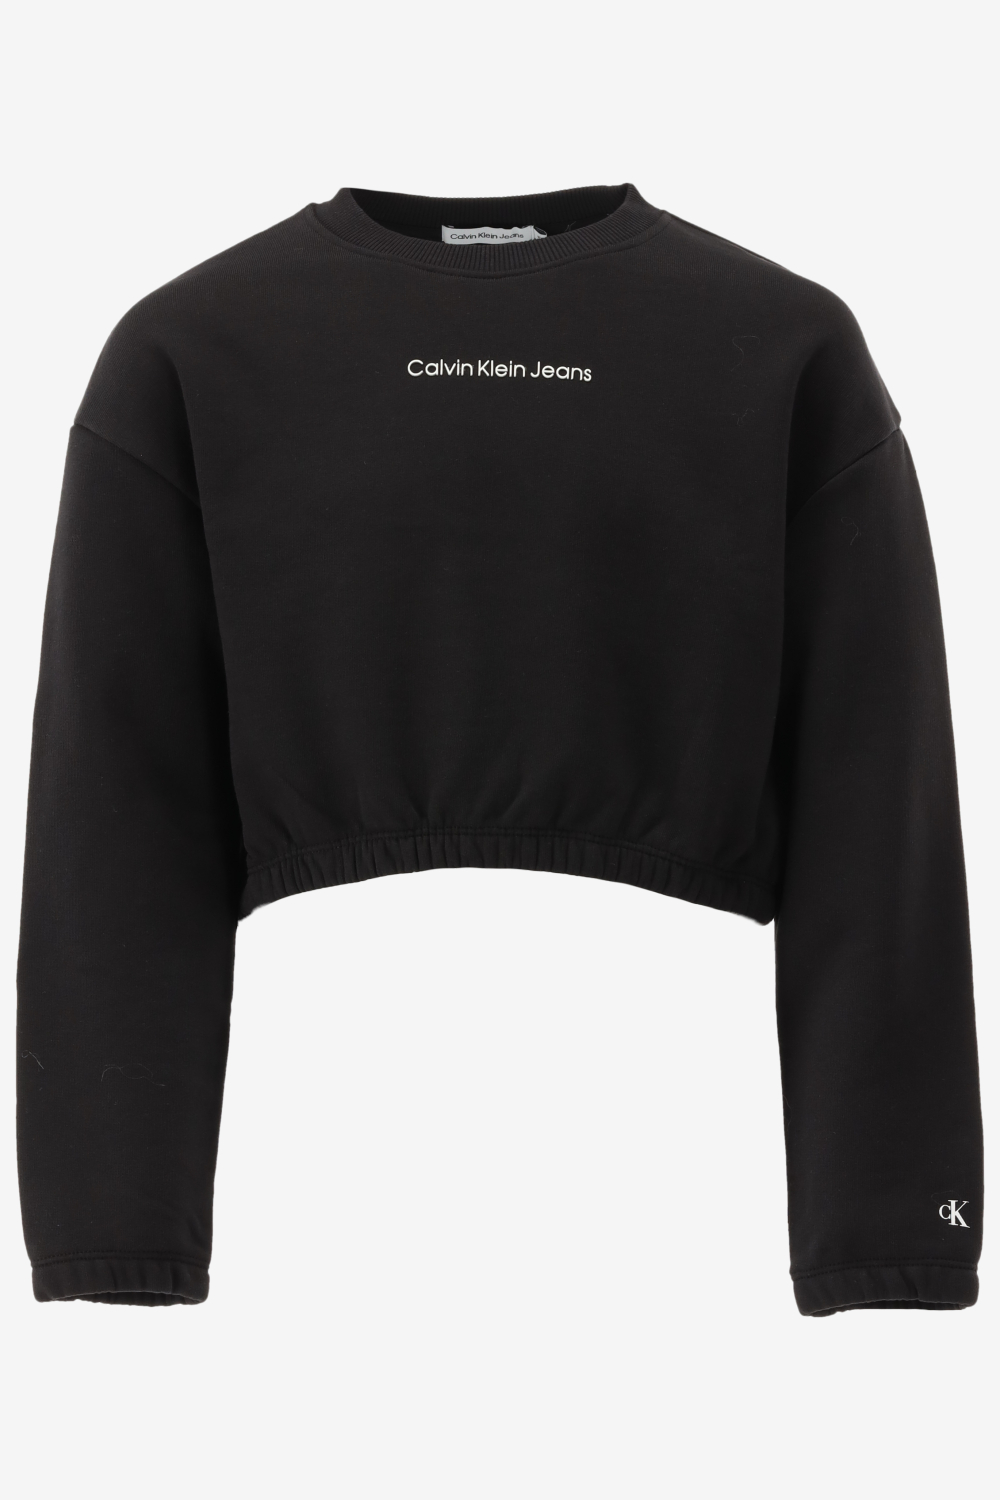 Calvin klein sweater ckj boxy logo cn swe maat 152/12J